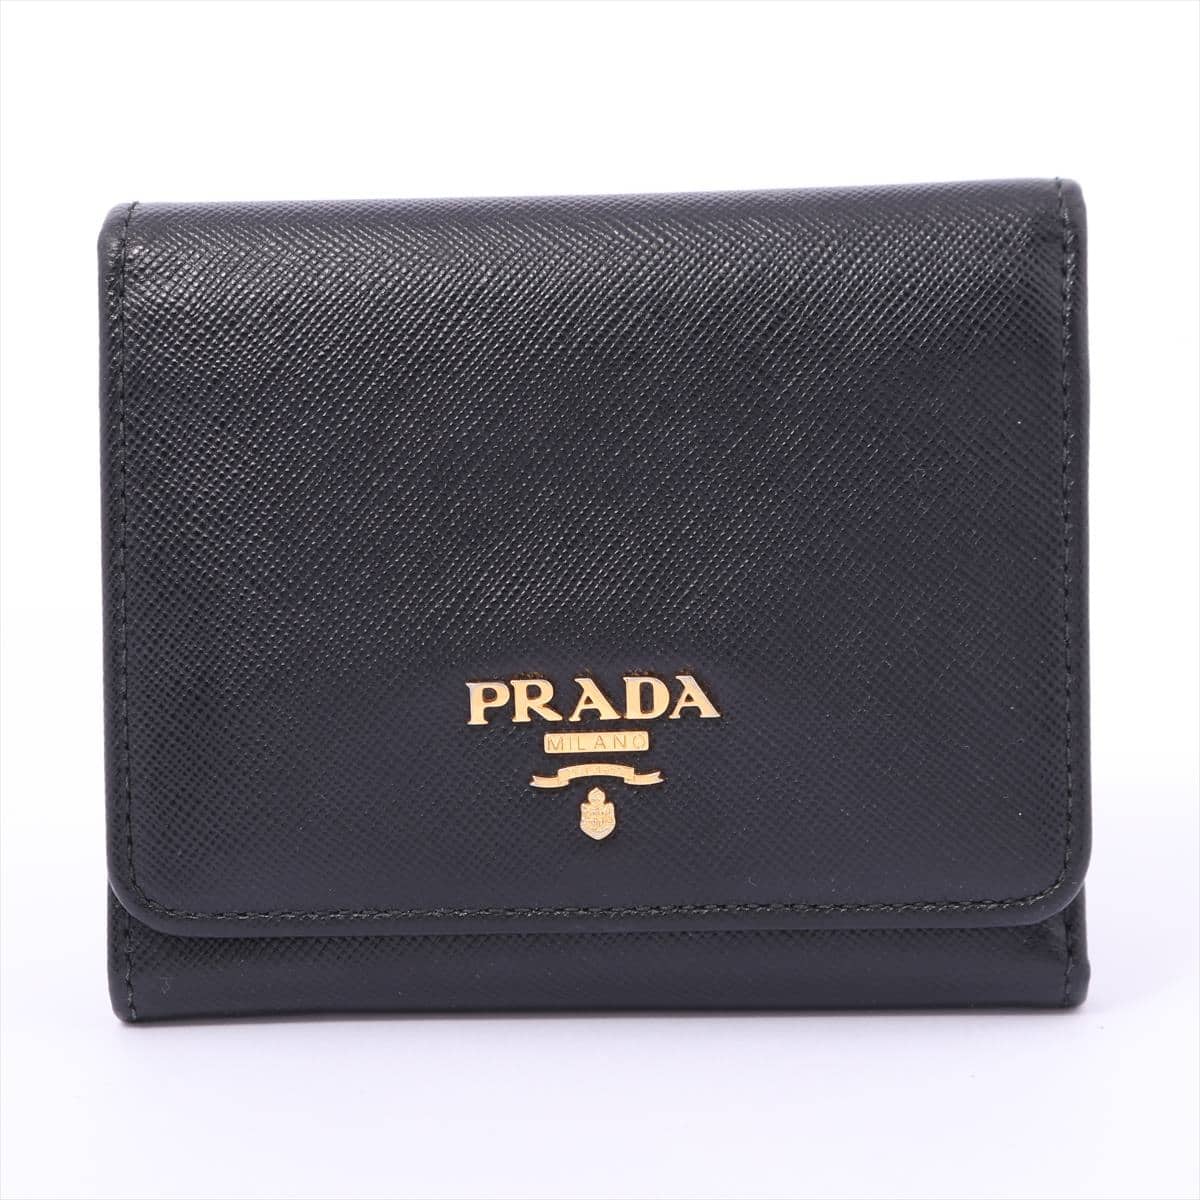 Prada Saffiano Metal 1M0176 Leather Wallet Black